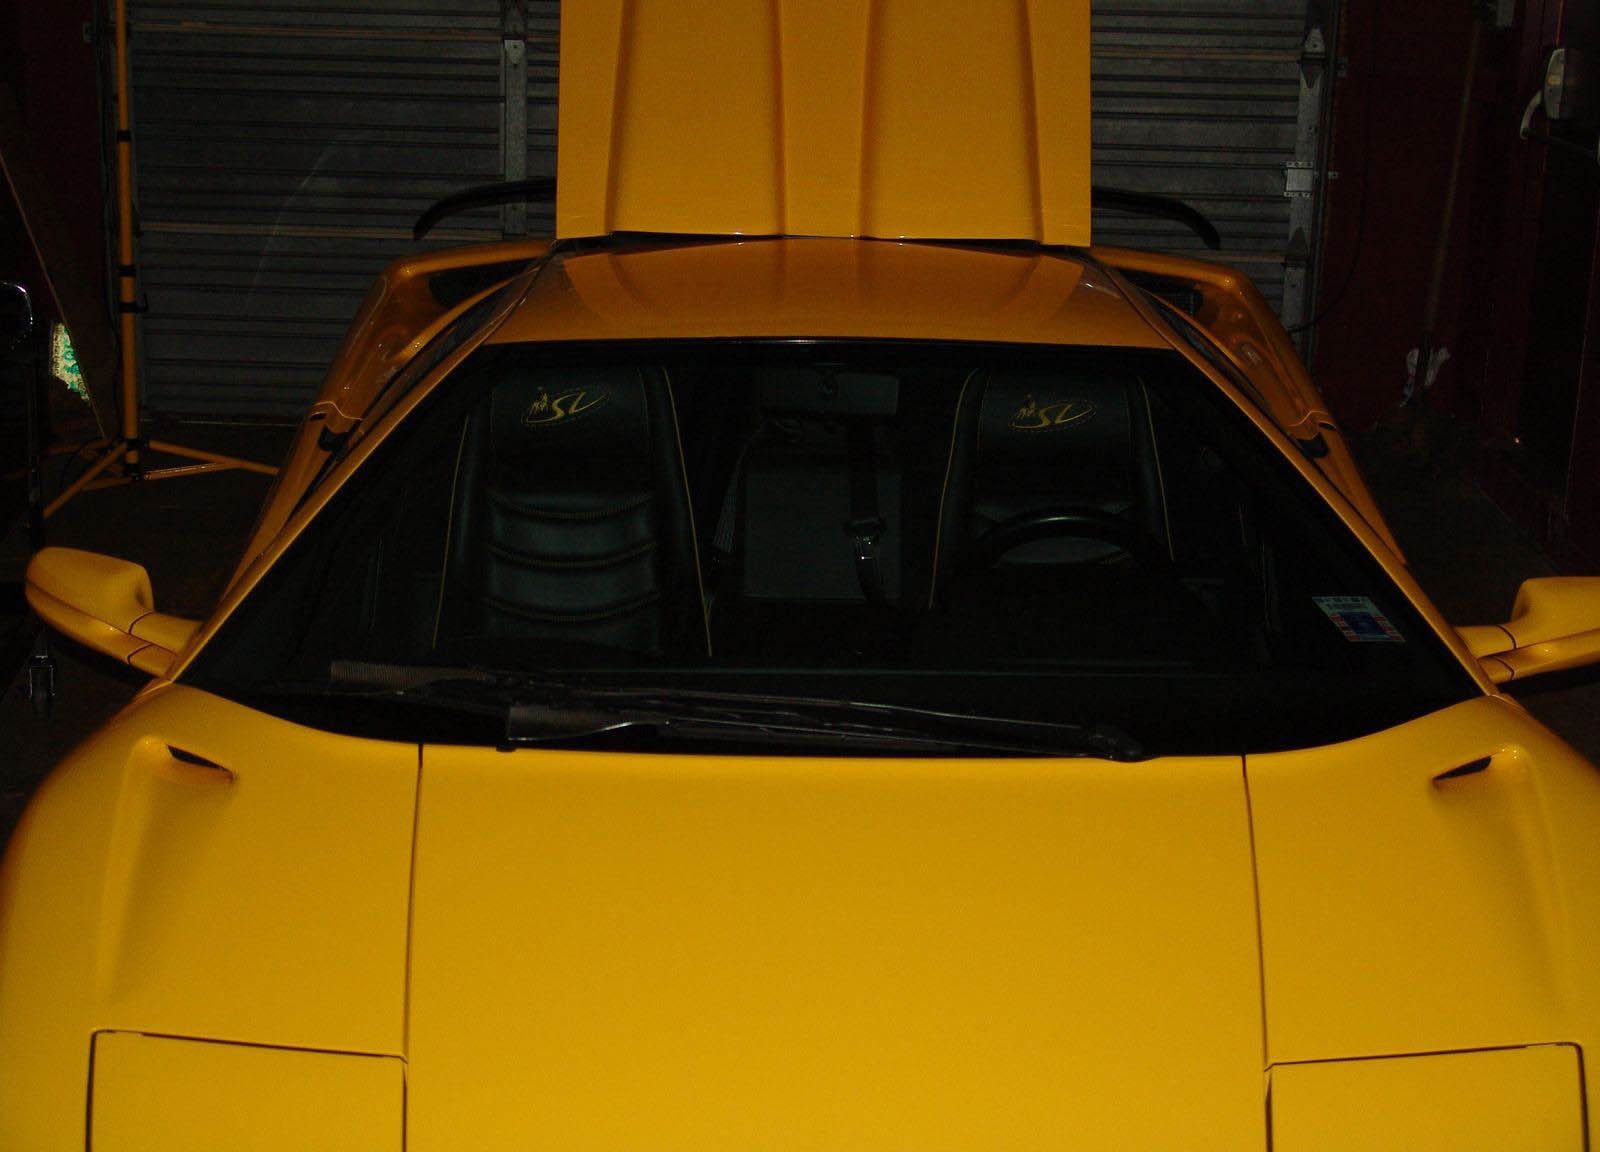 1995 - 2001 Lamborghini Diablo SV